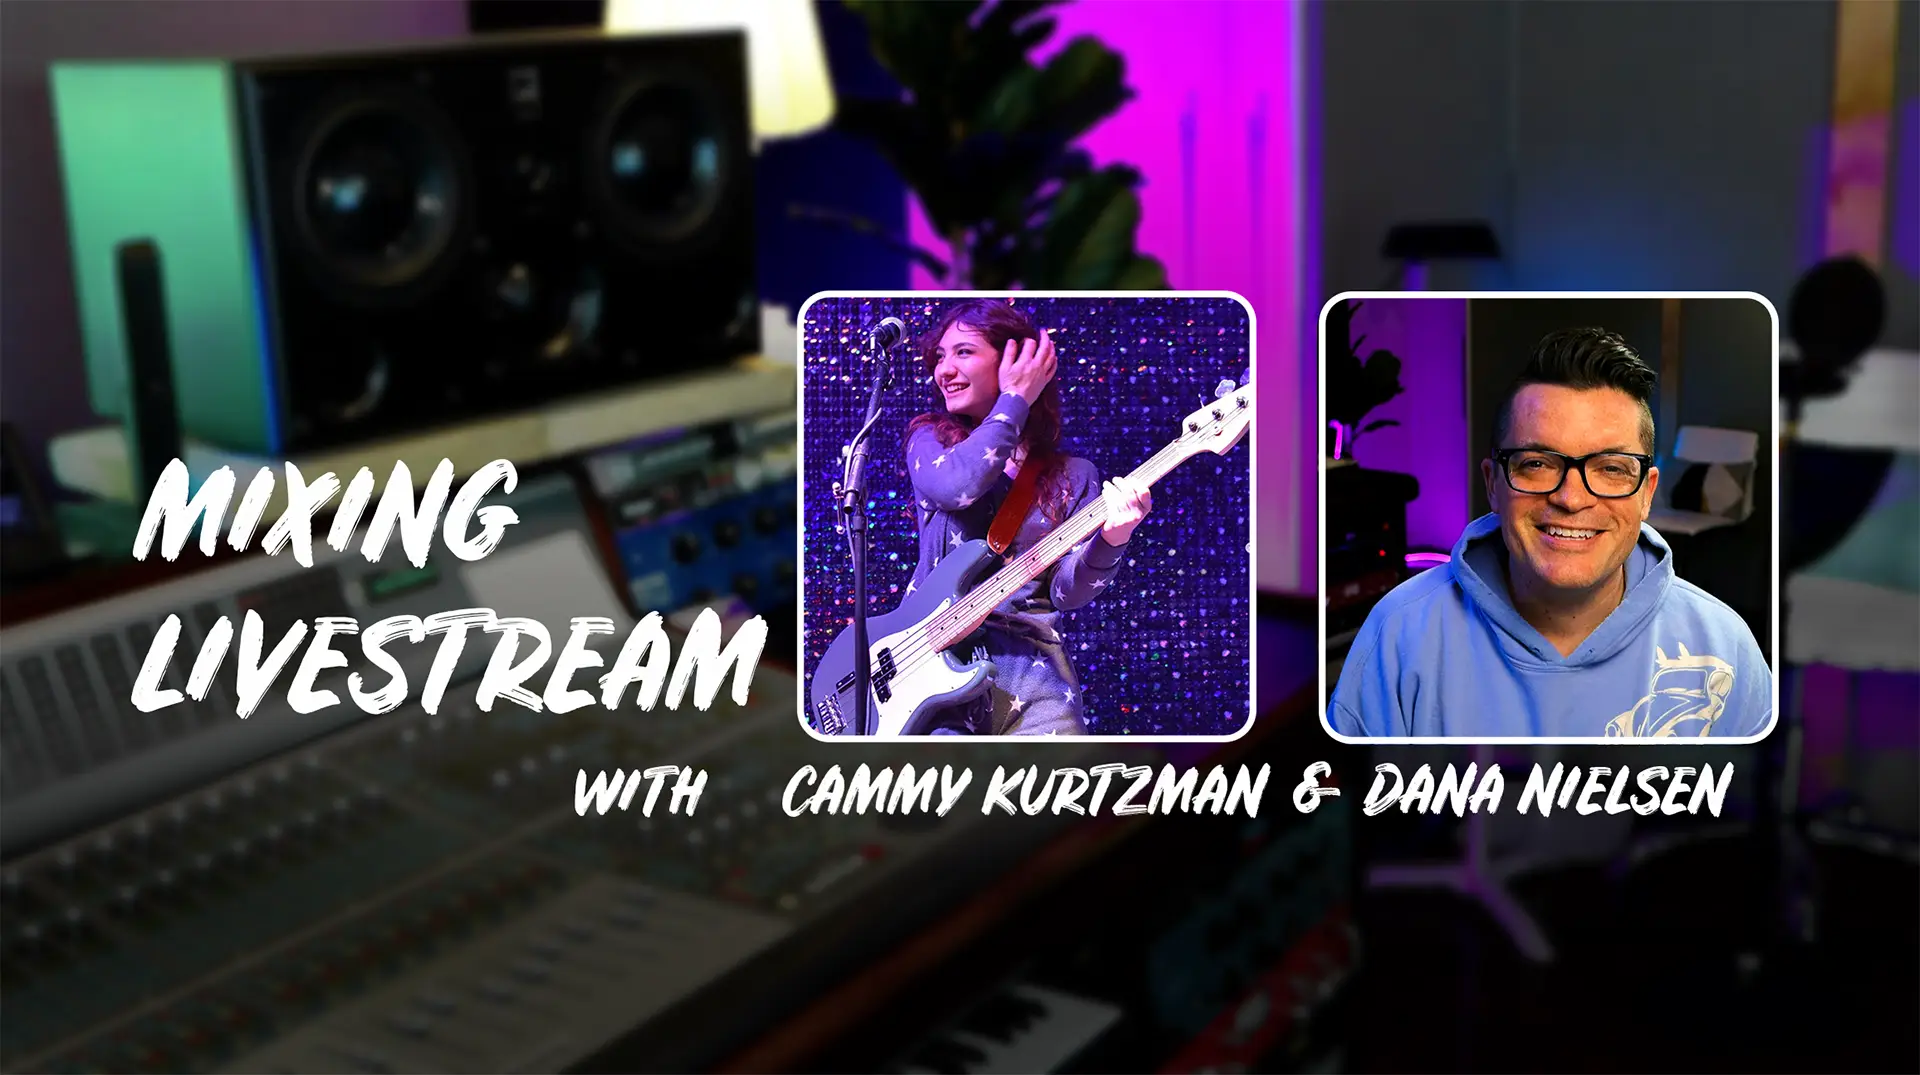 Recording studio in background with square photo overlays of Cammy Kurtzman and Dana Nielsen and text: Mixing Livestream with Cammy Kurtzman and Dana Nielsen